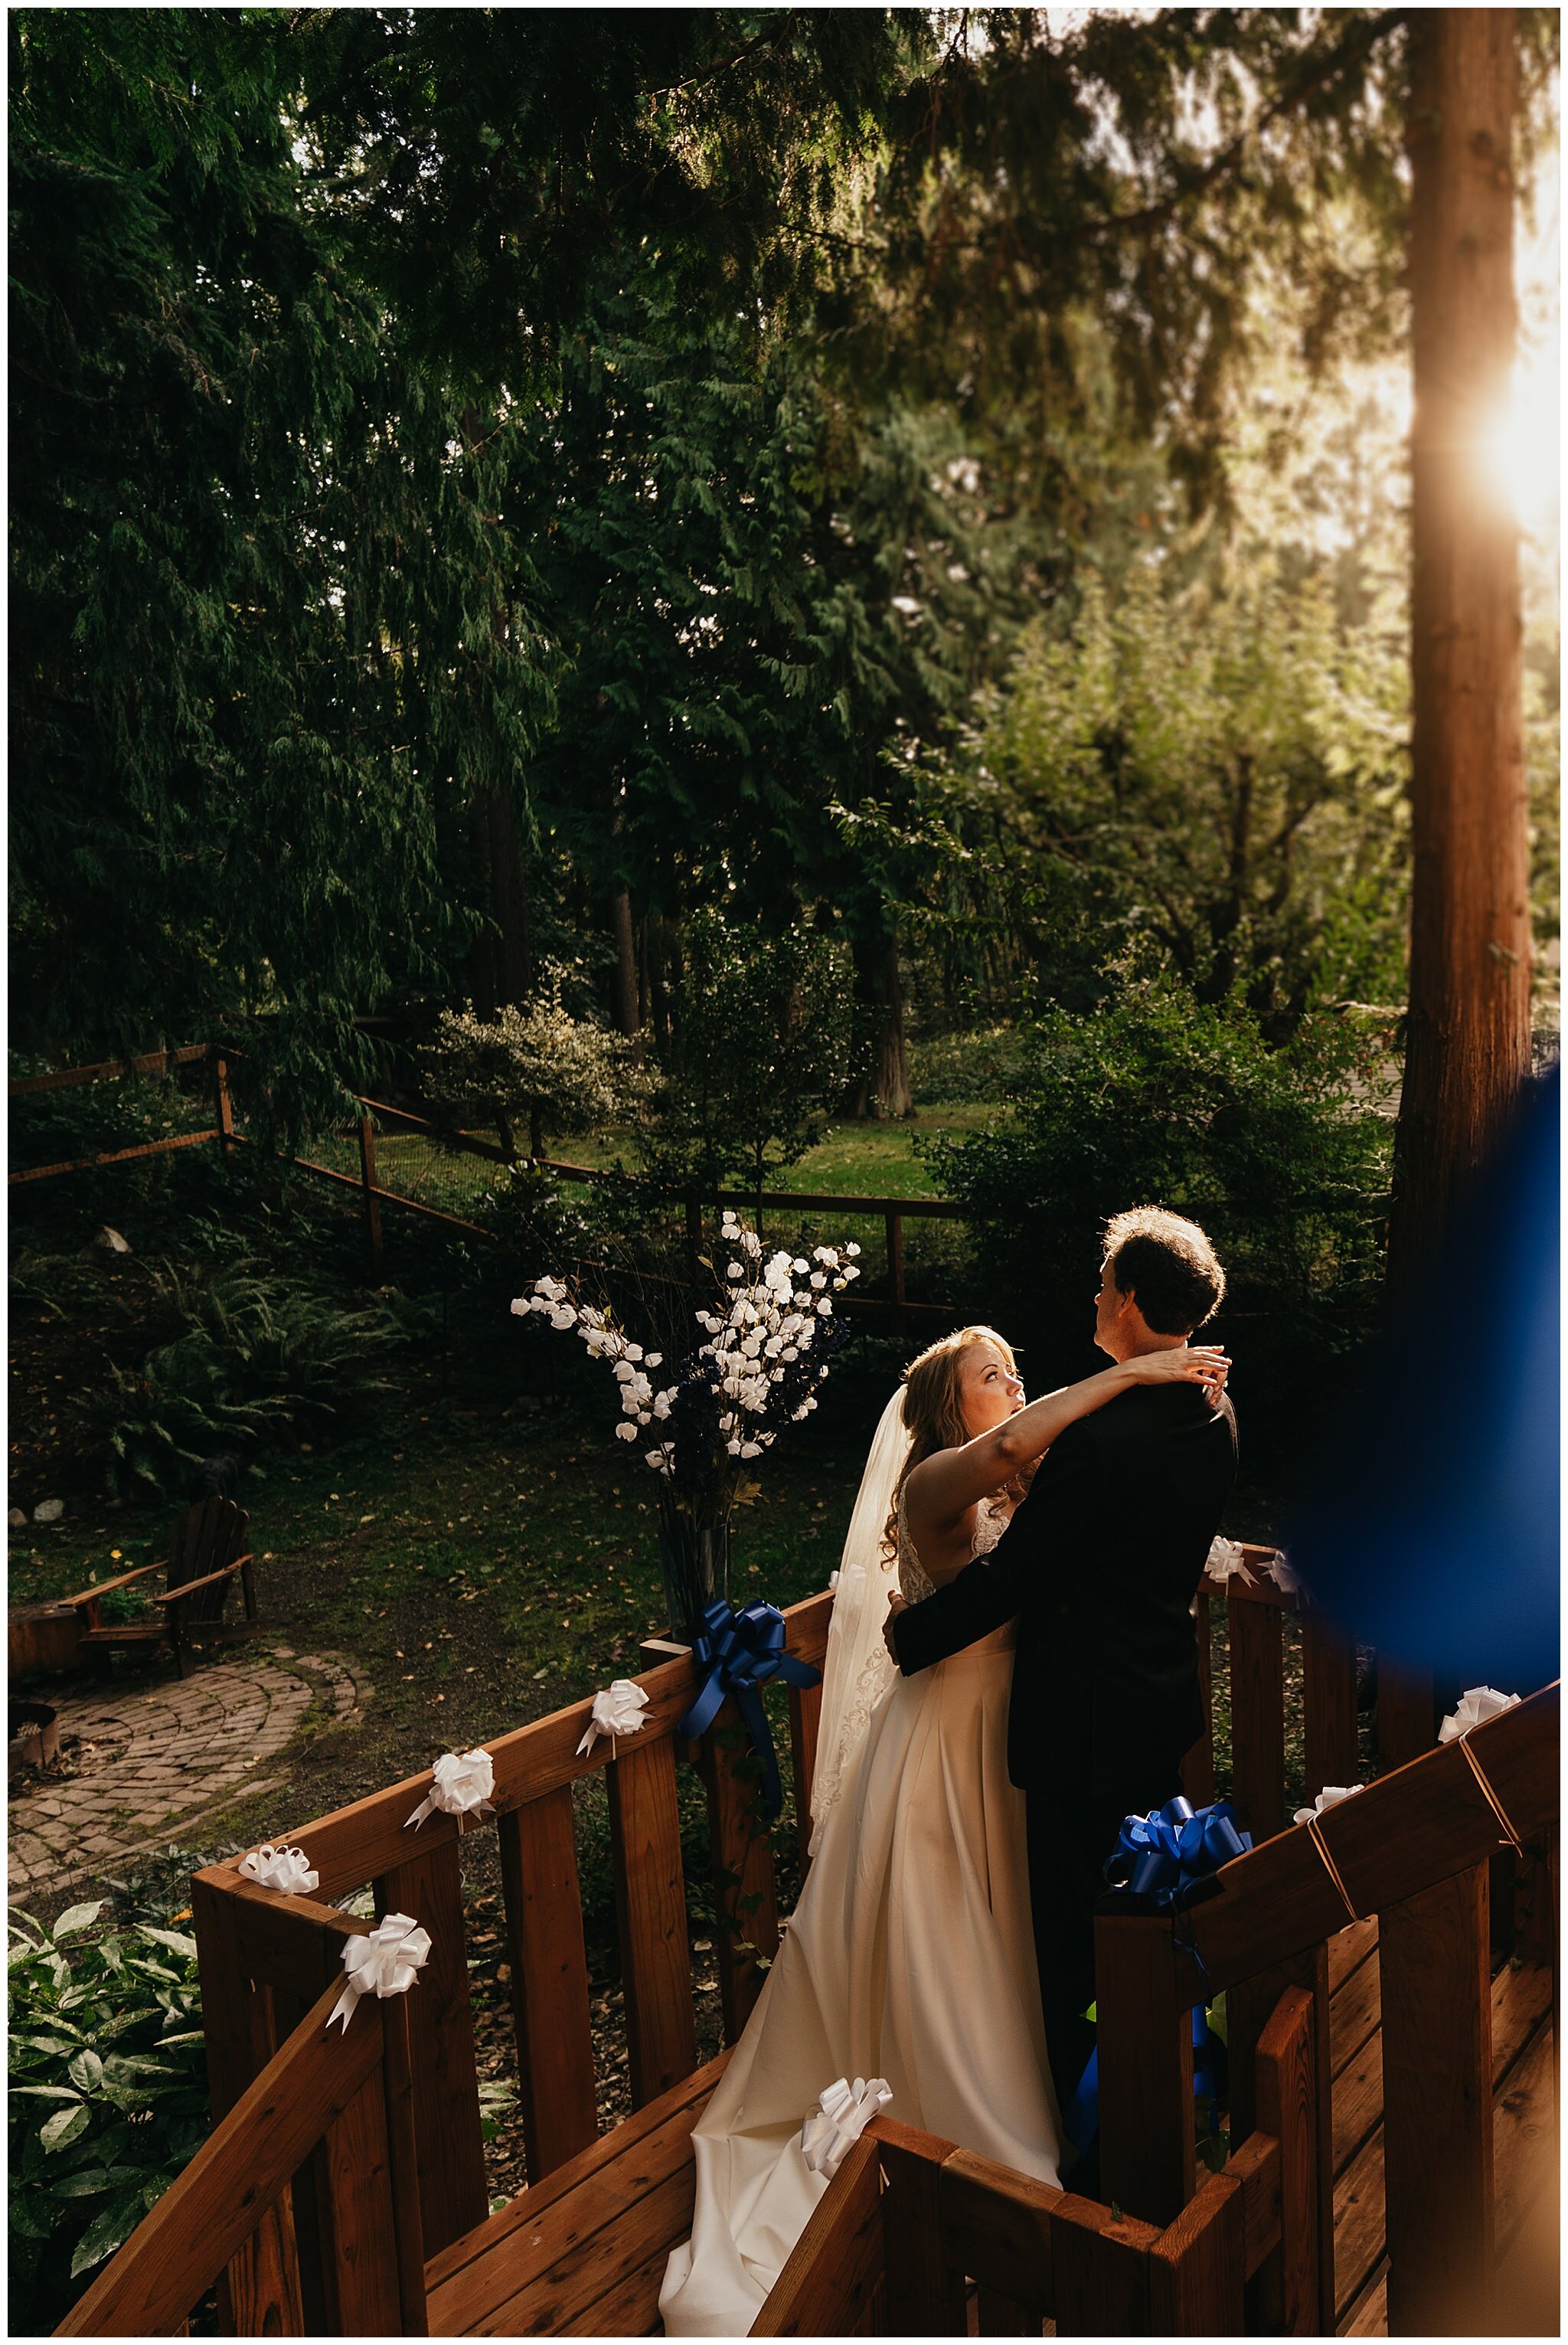 mukilteo-backyard-wedding-cherie-howie-24.jpg